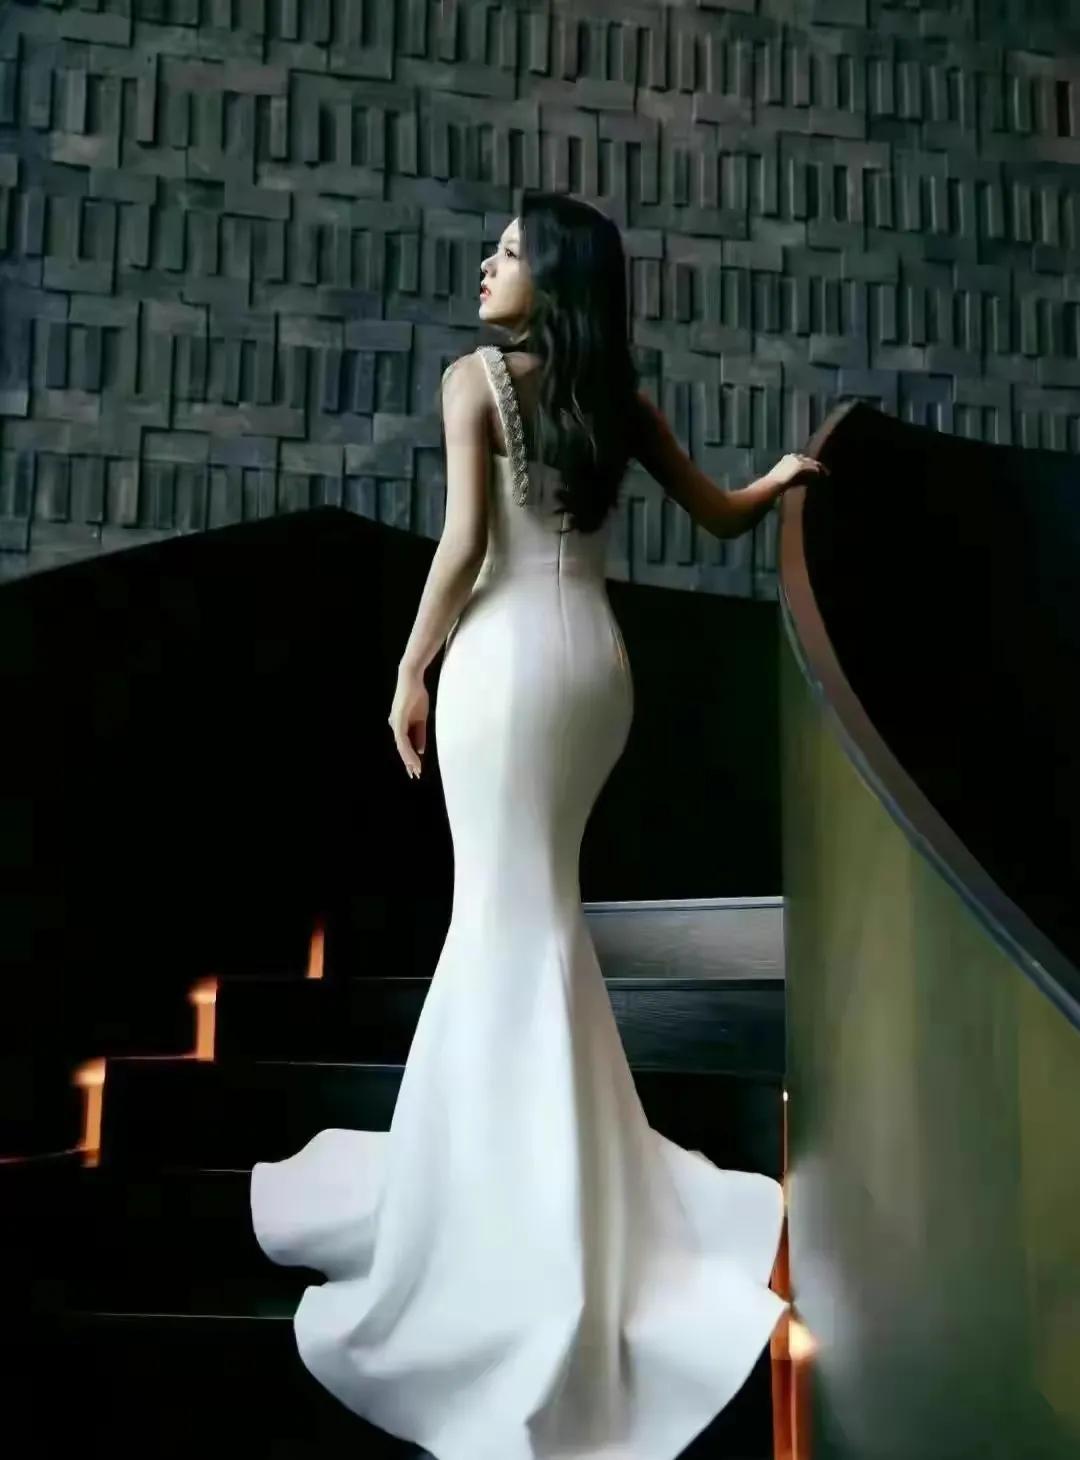 Lee Yeon-jeong: Perfect figure, stunning beauty - iMedia